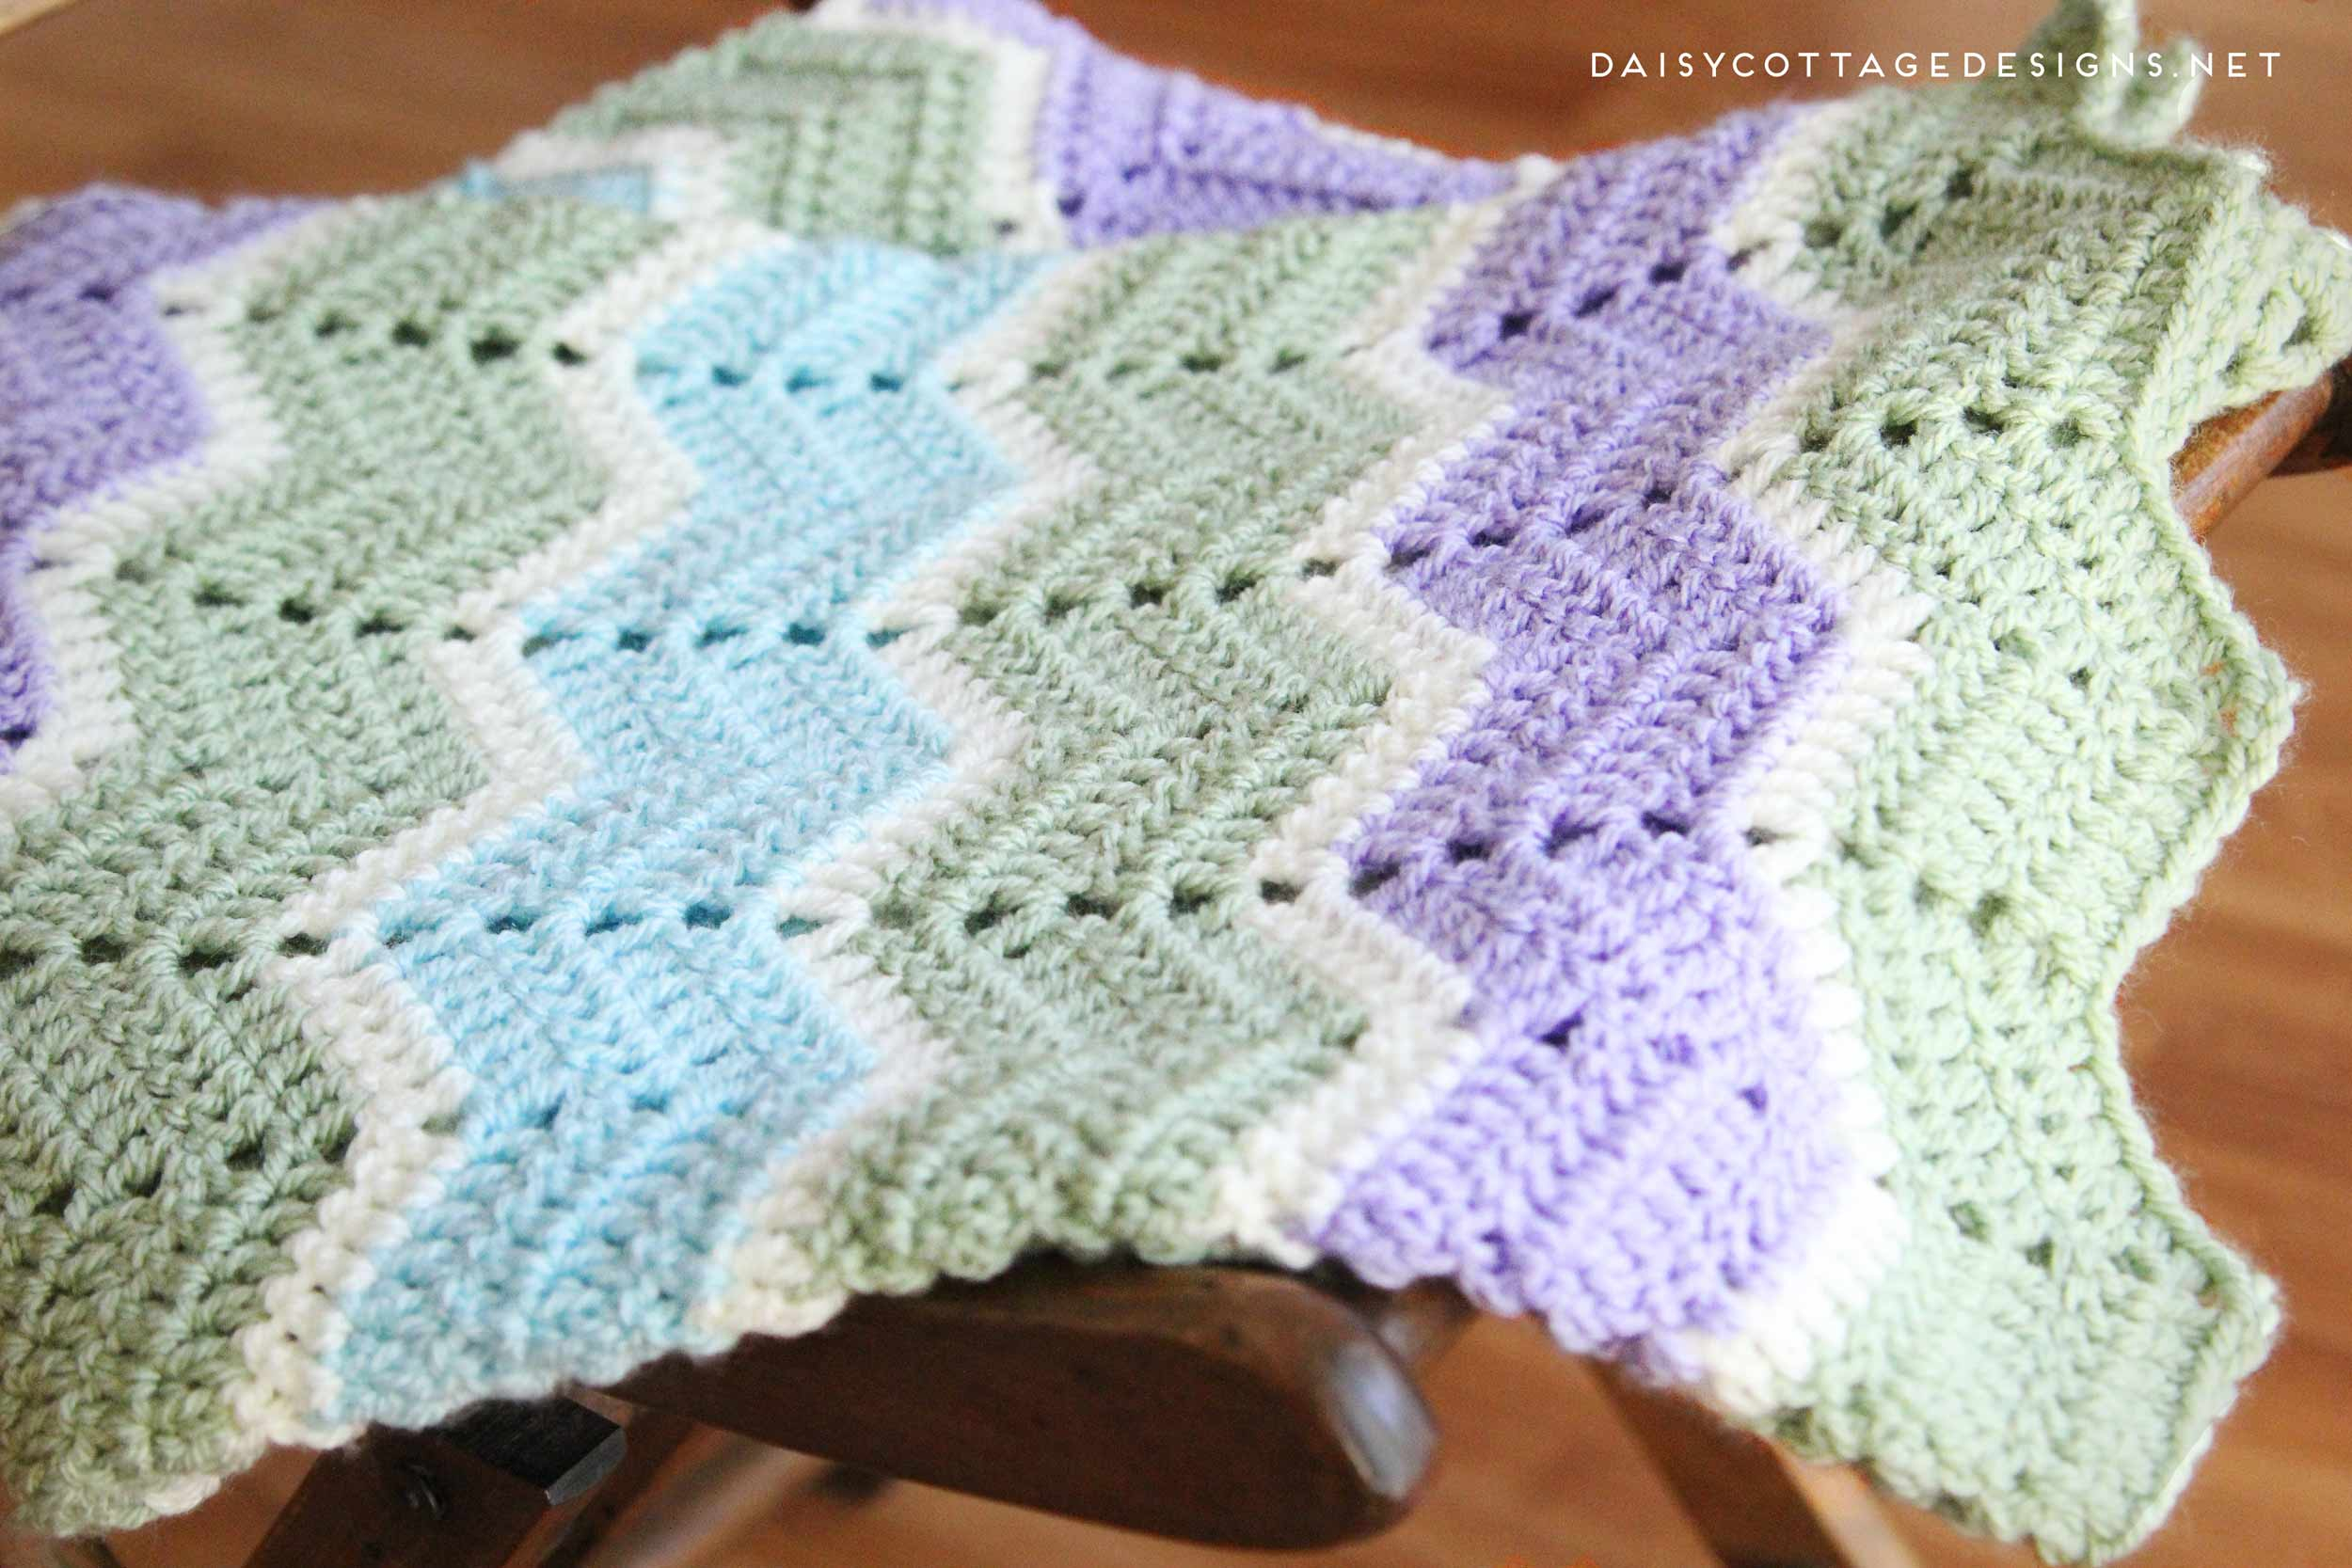 Easy Baby Blanket Crochet Patterns For Beginners Easy Chevron Blanket Crochet Pattern Daisy Cottage Designs